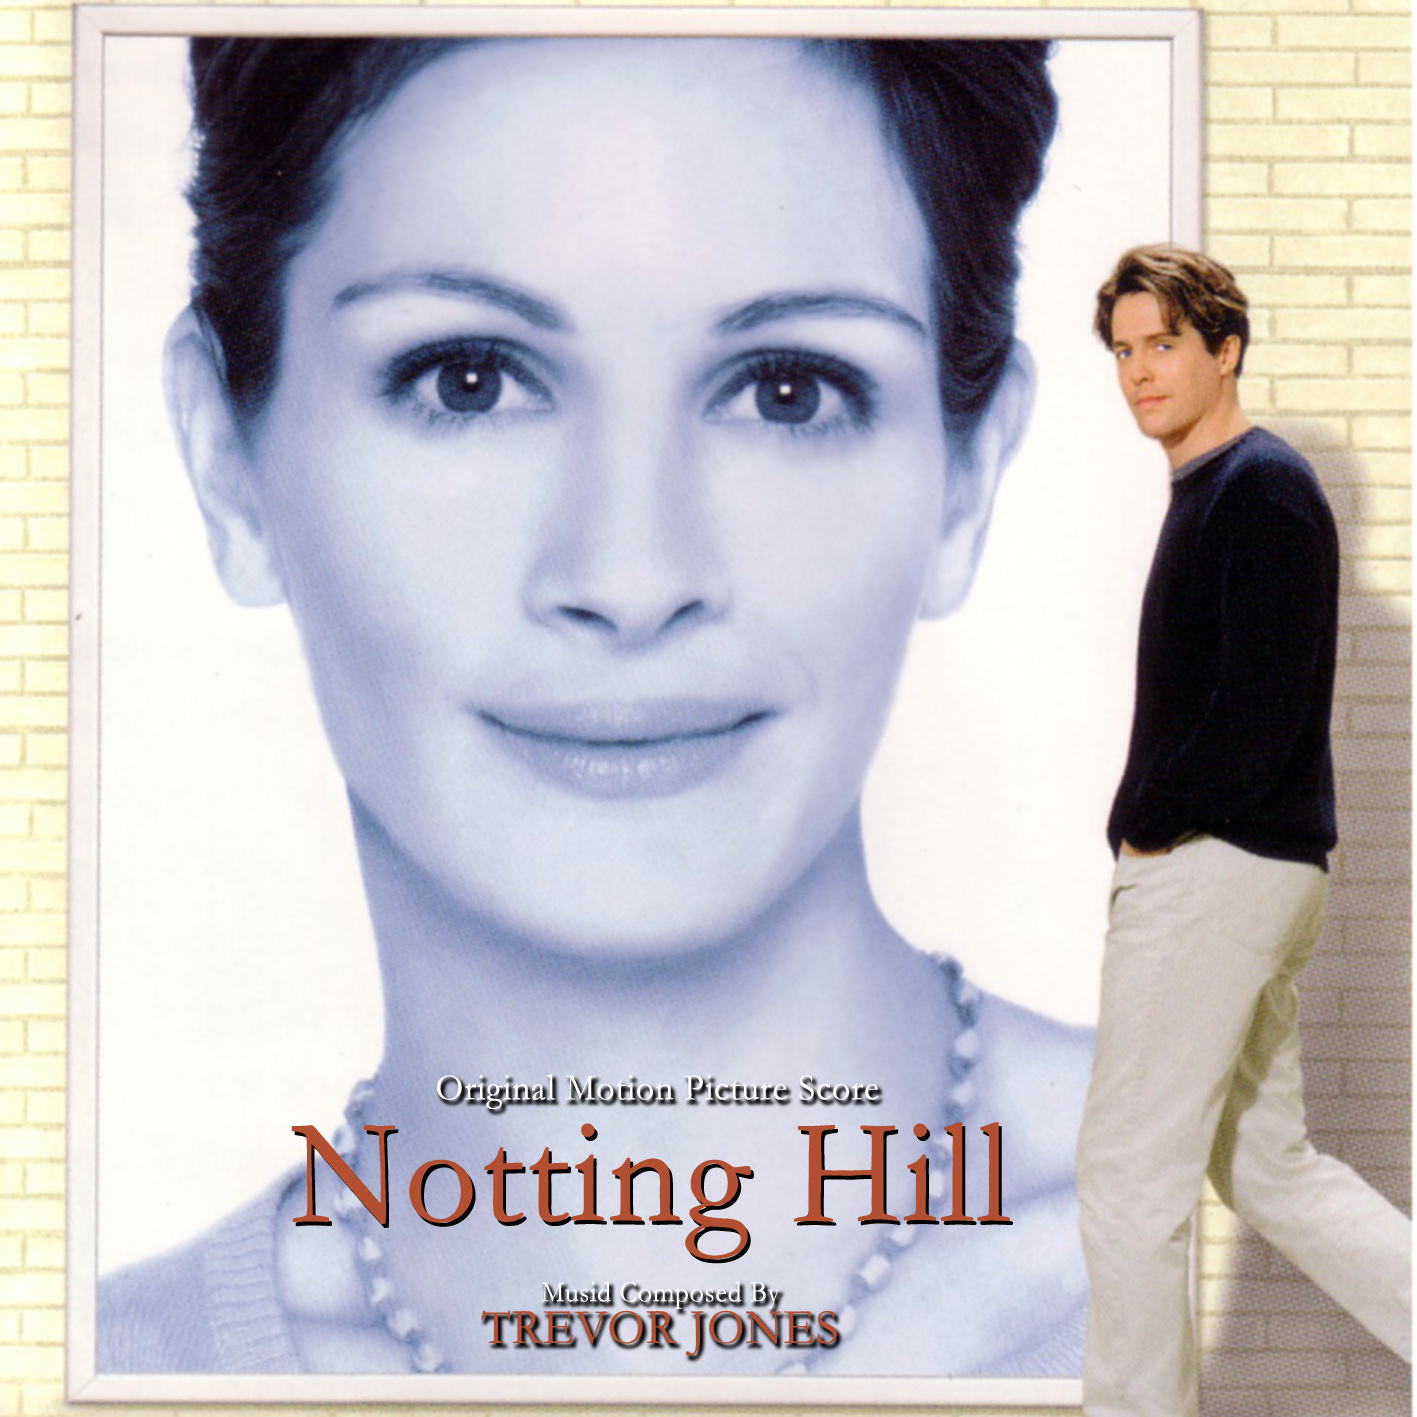 Notting Hill Movie Online